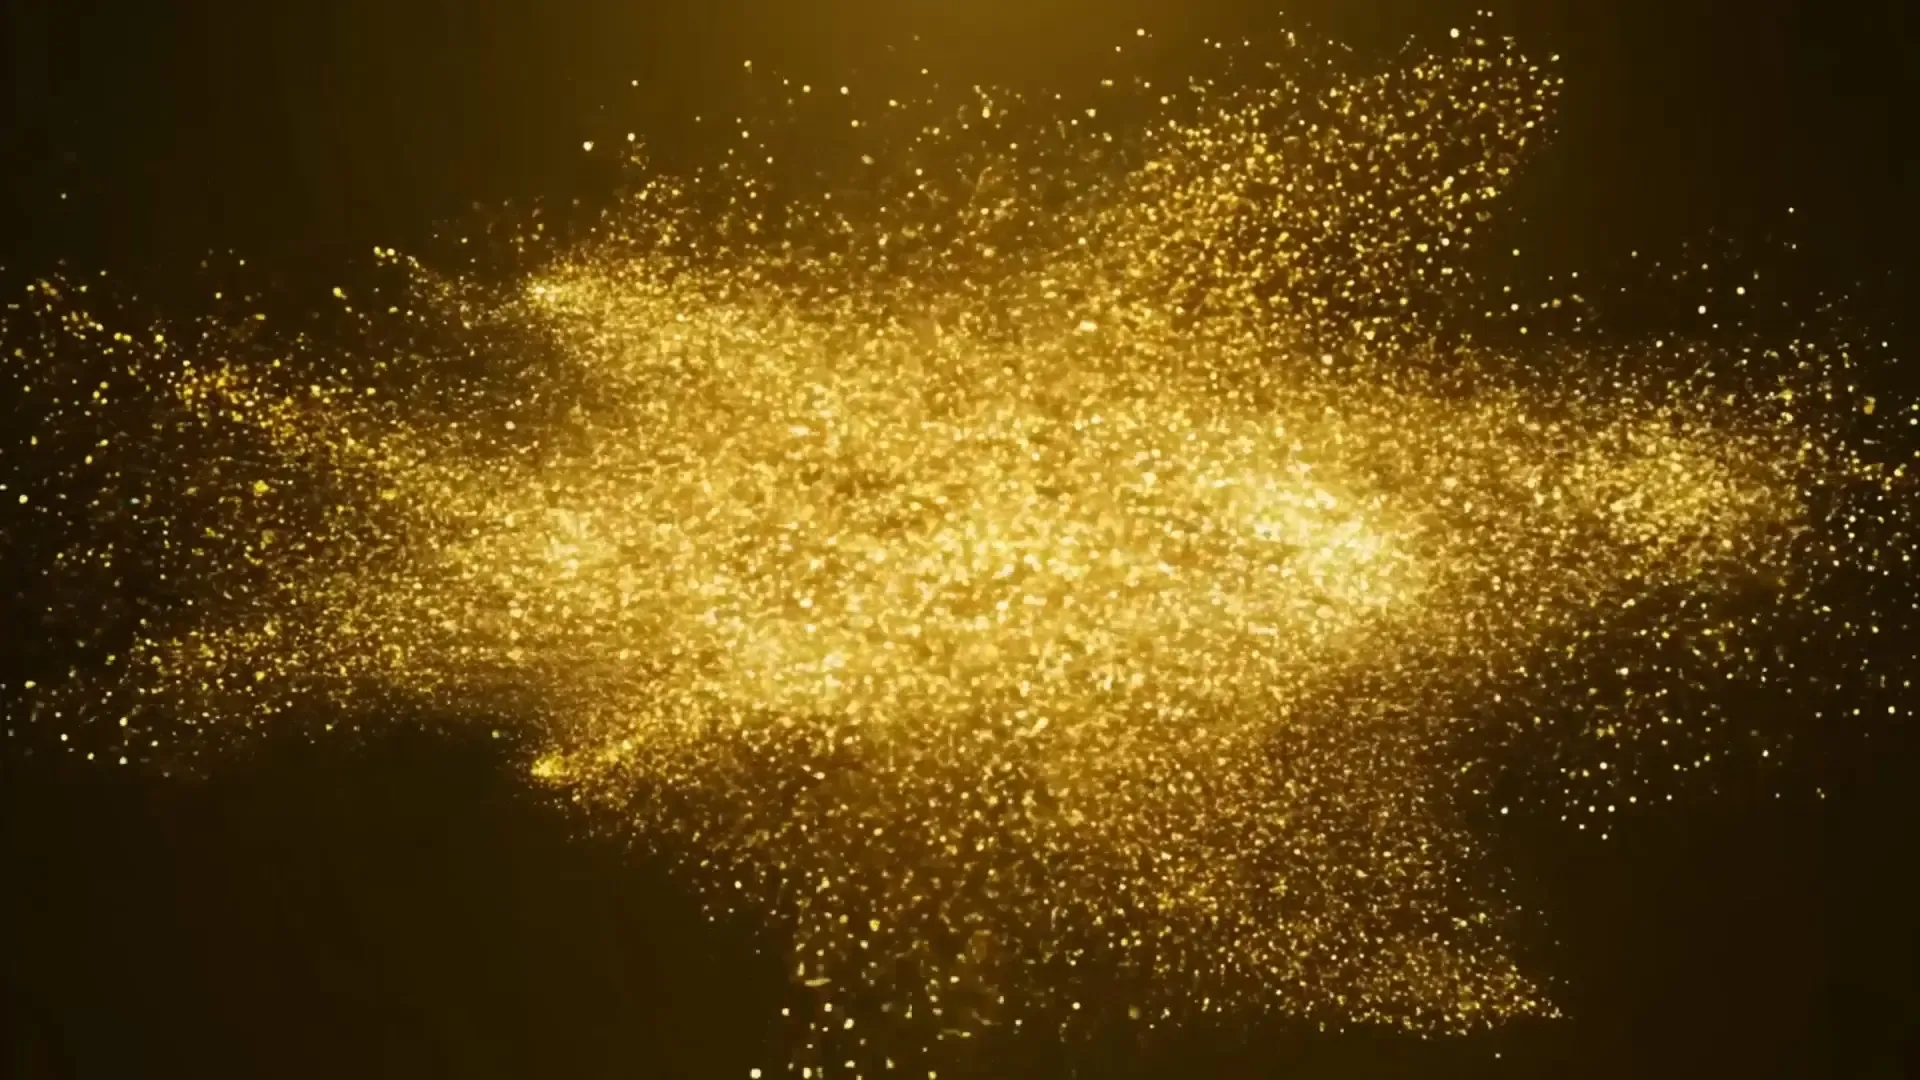 Luminous Golden Particles Overlay